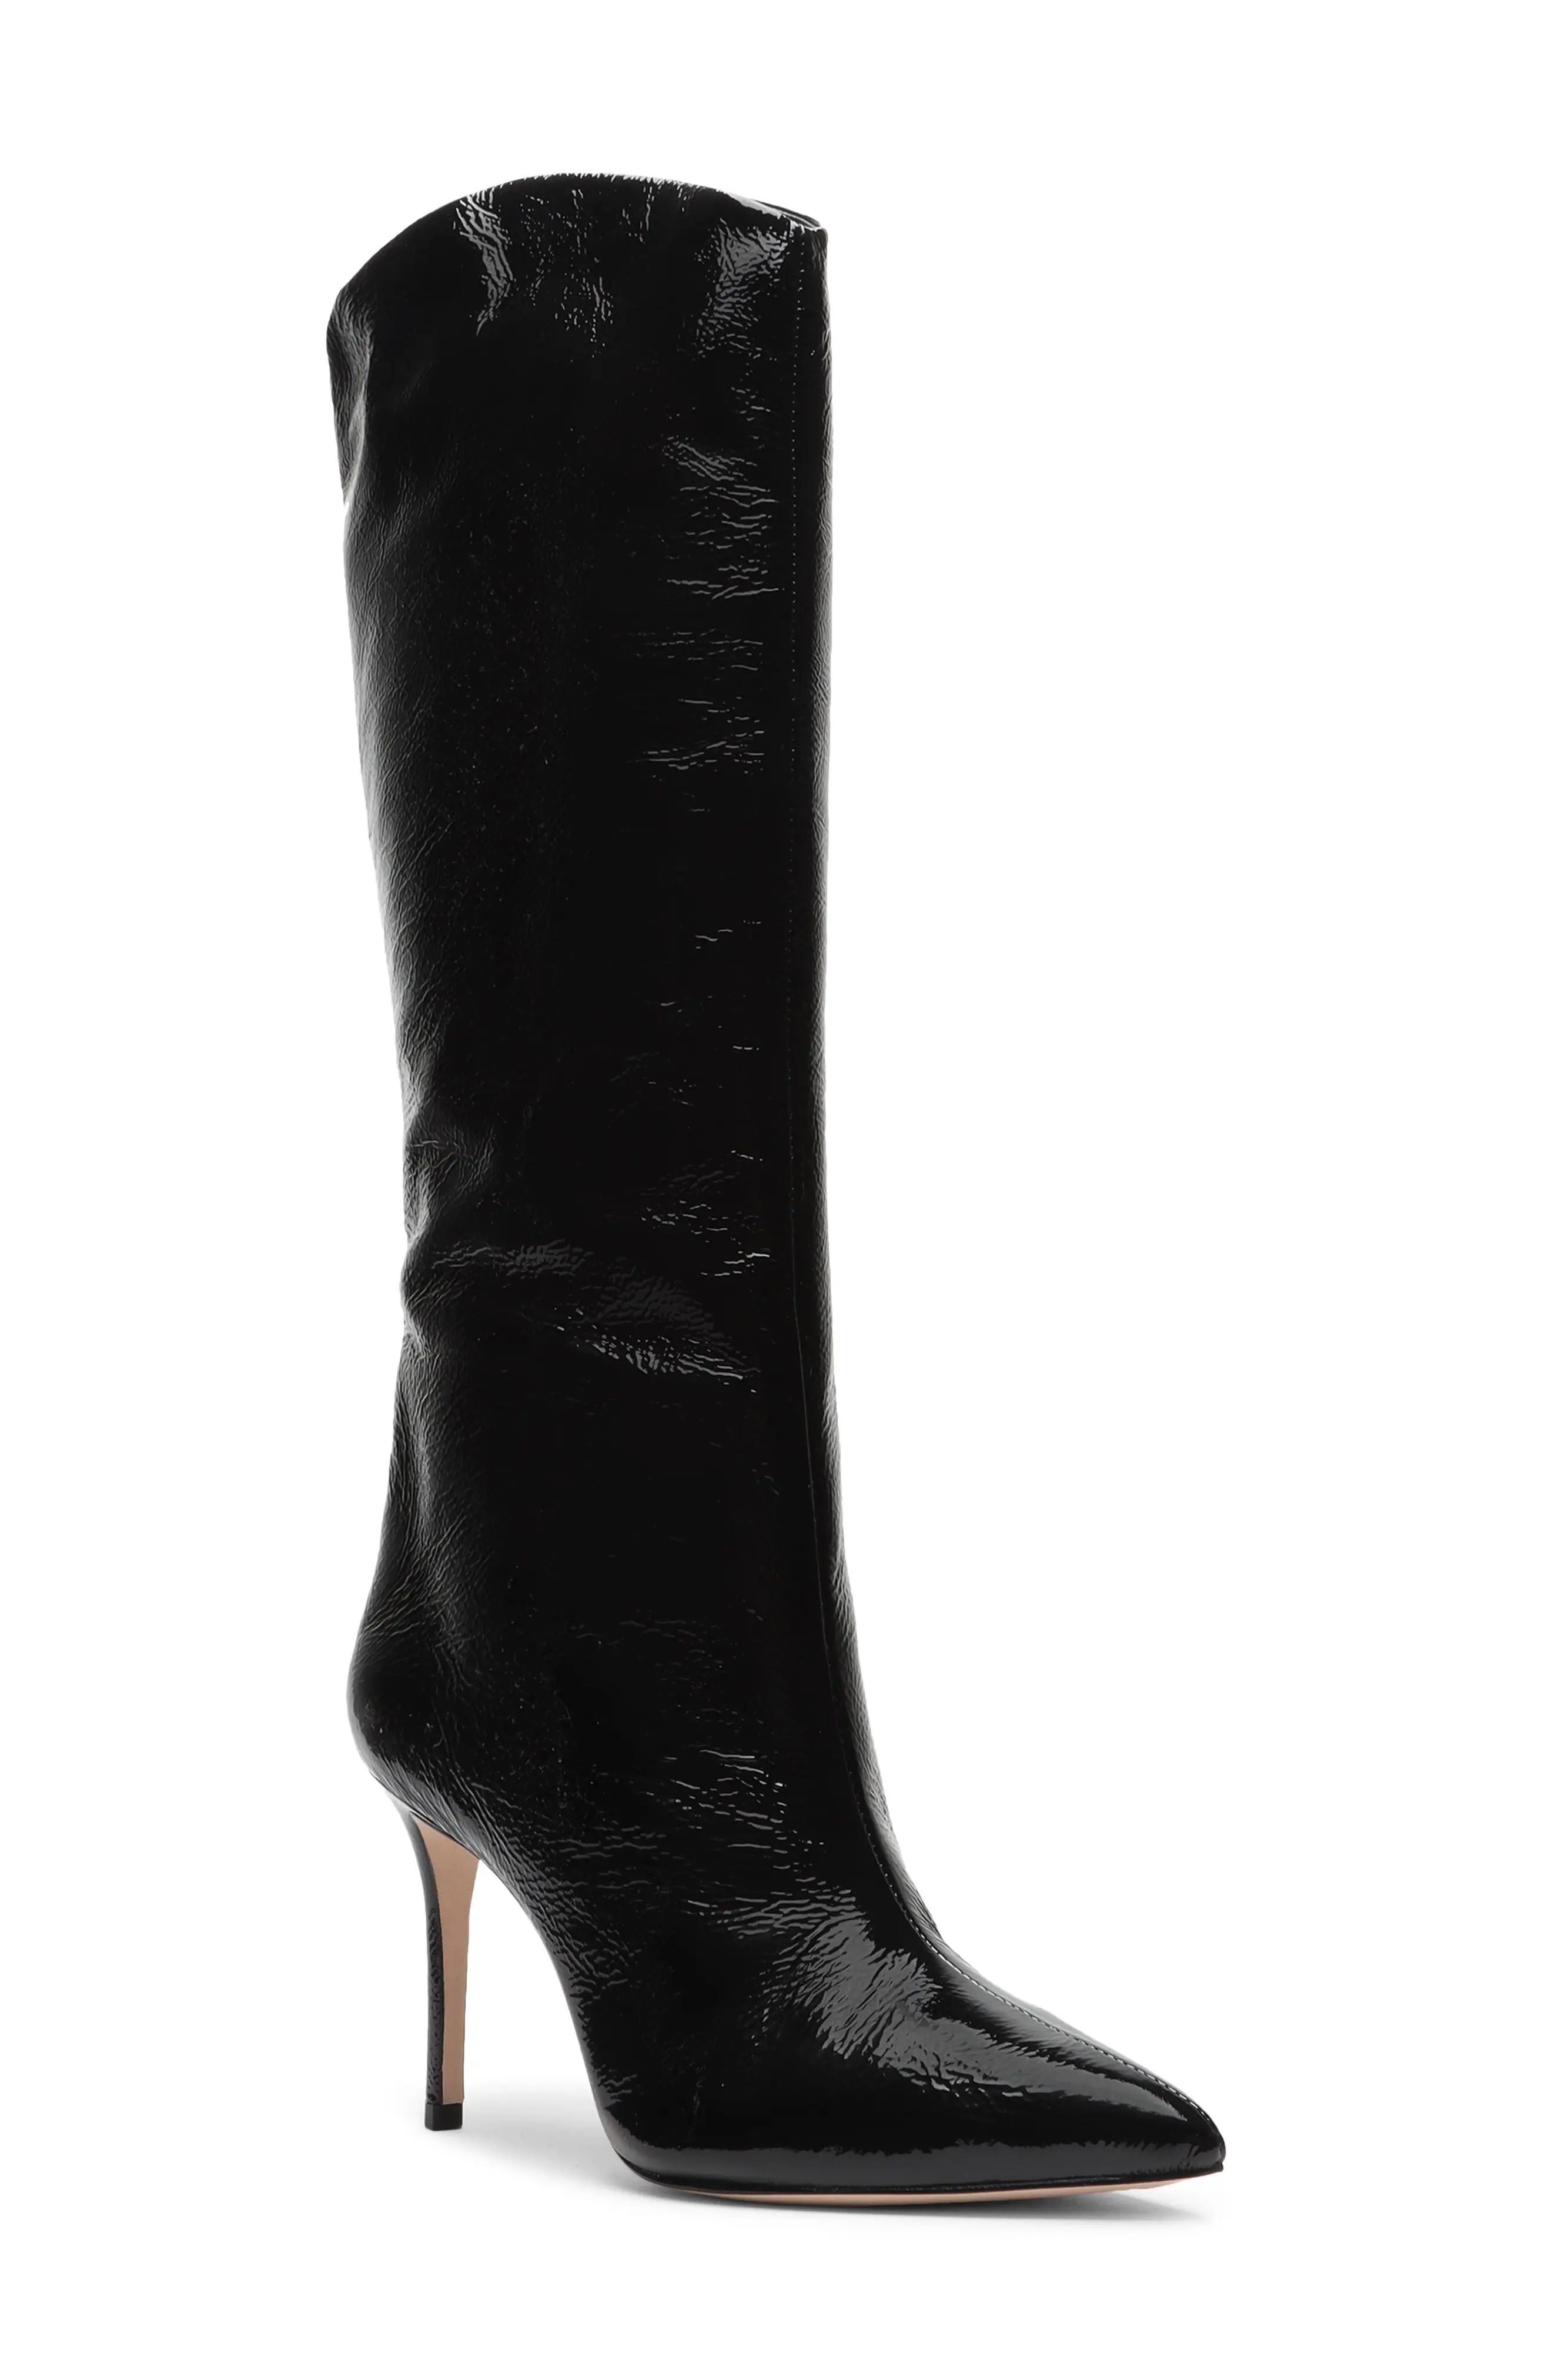 Women's Schutz Maryana Pointed Toe Boot, Size 8.5 M - Black | Nordstrom